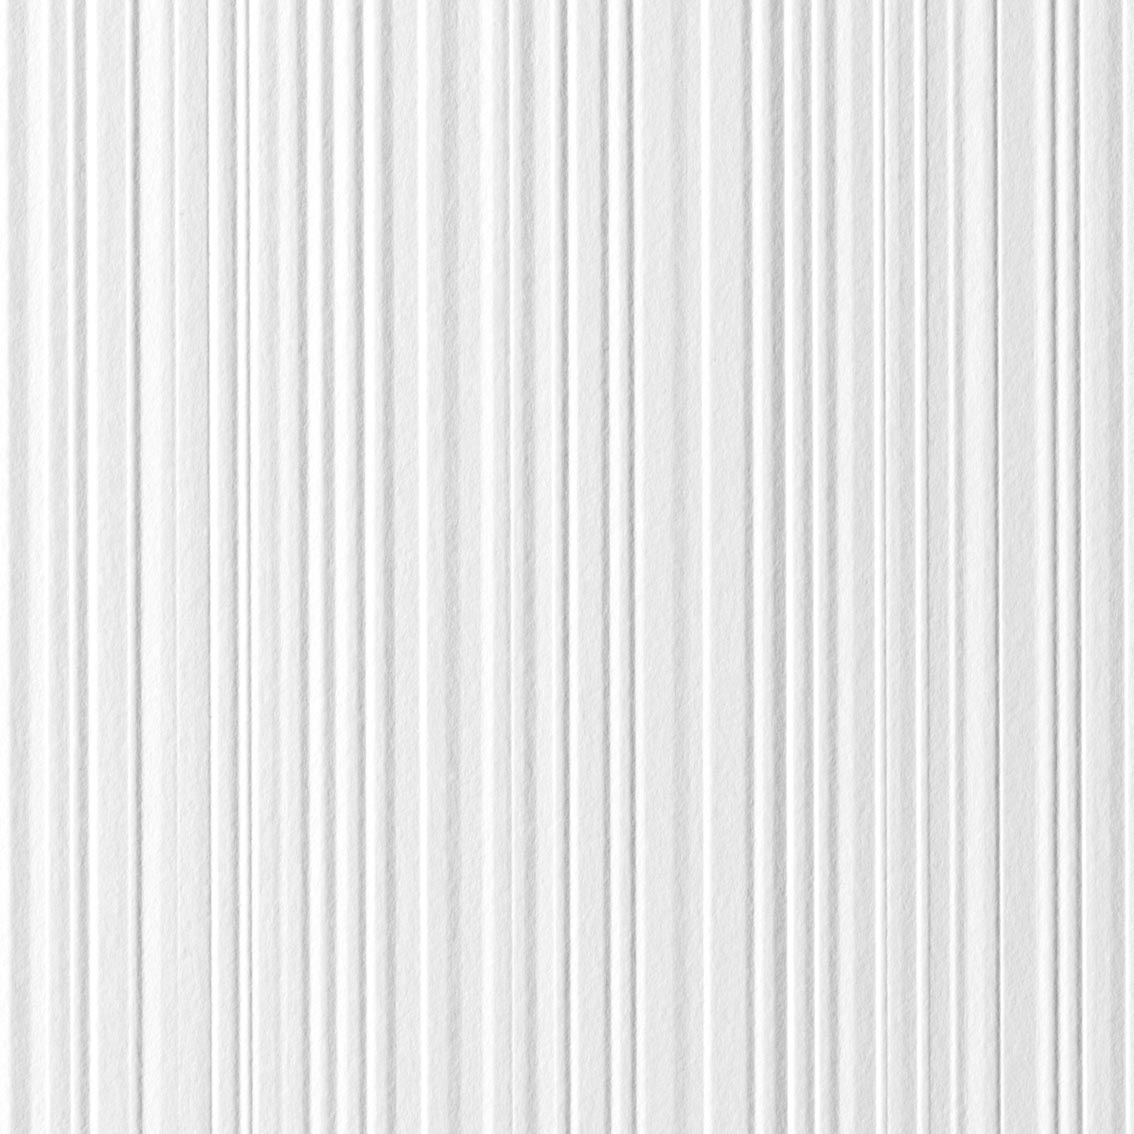 Lines White 001-zoom